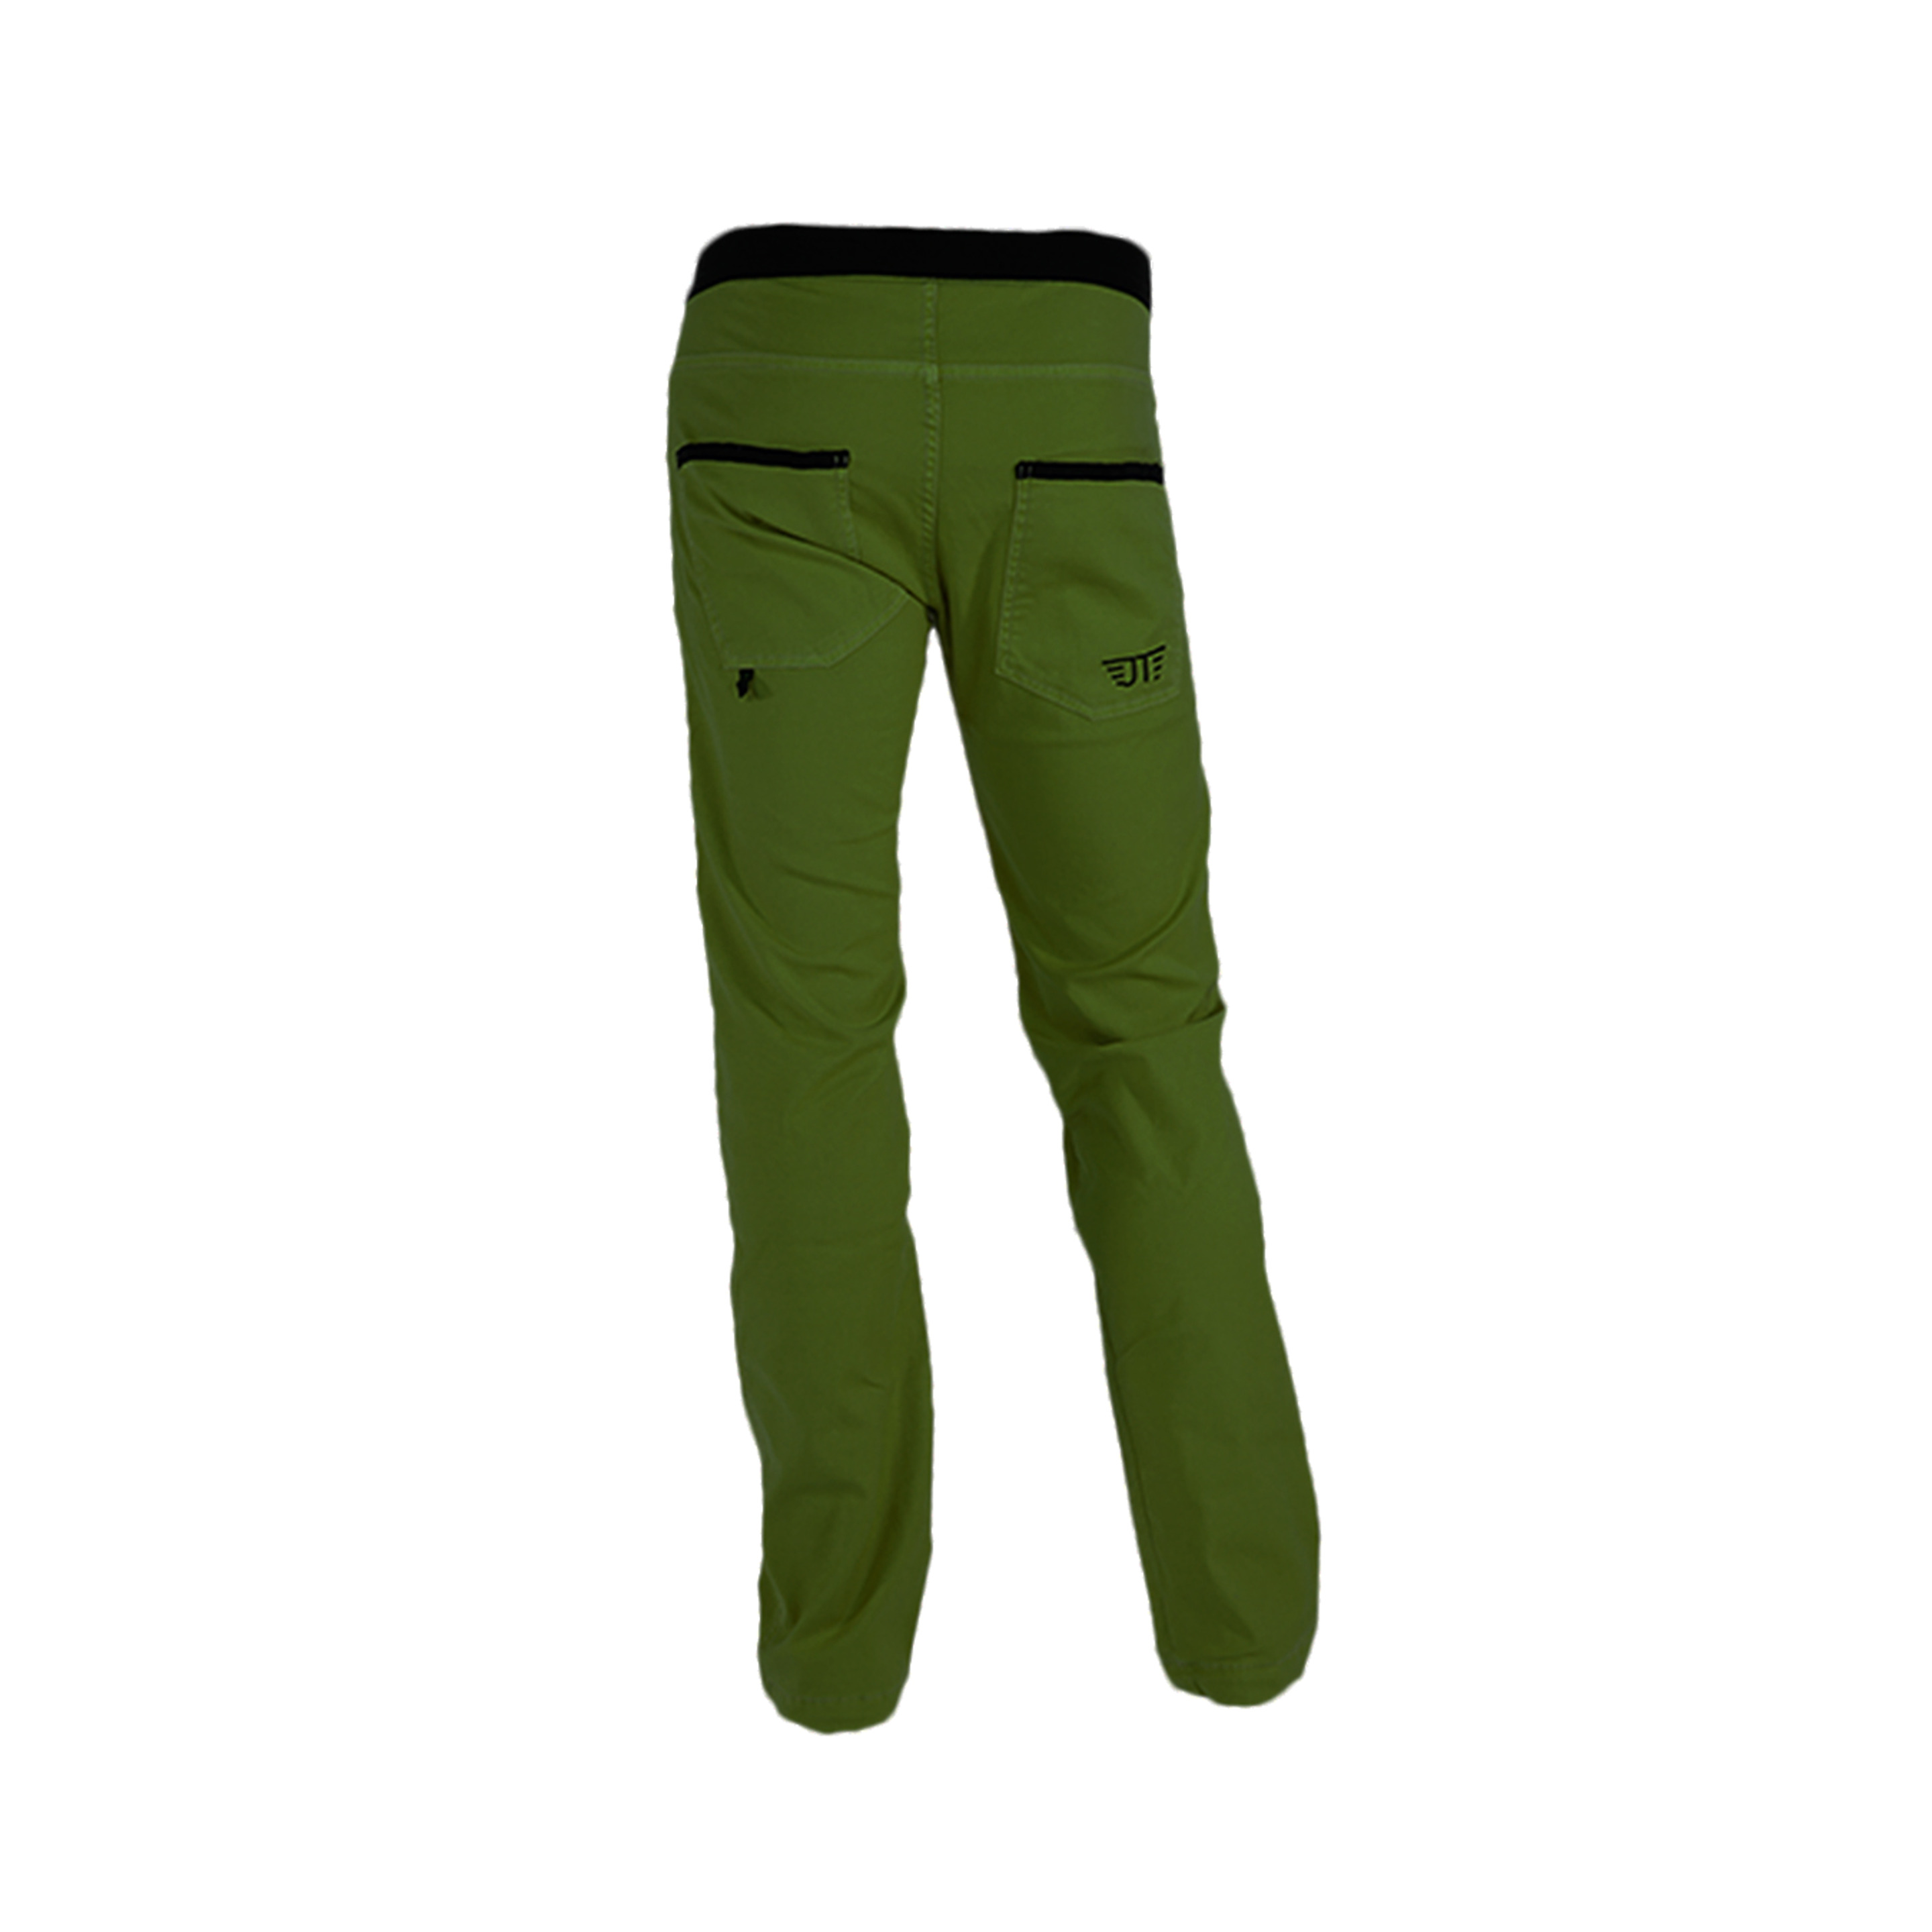 Pantalón Escalada Jeanstrack Turia - Verde Oscuro - Turia Eco Musgo  MKP